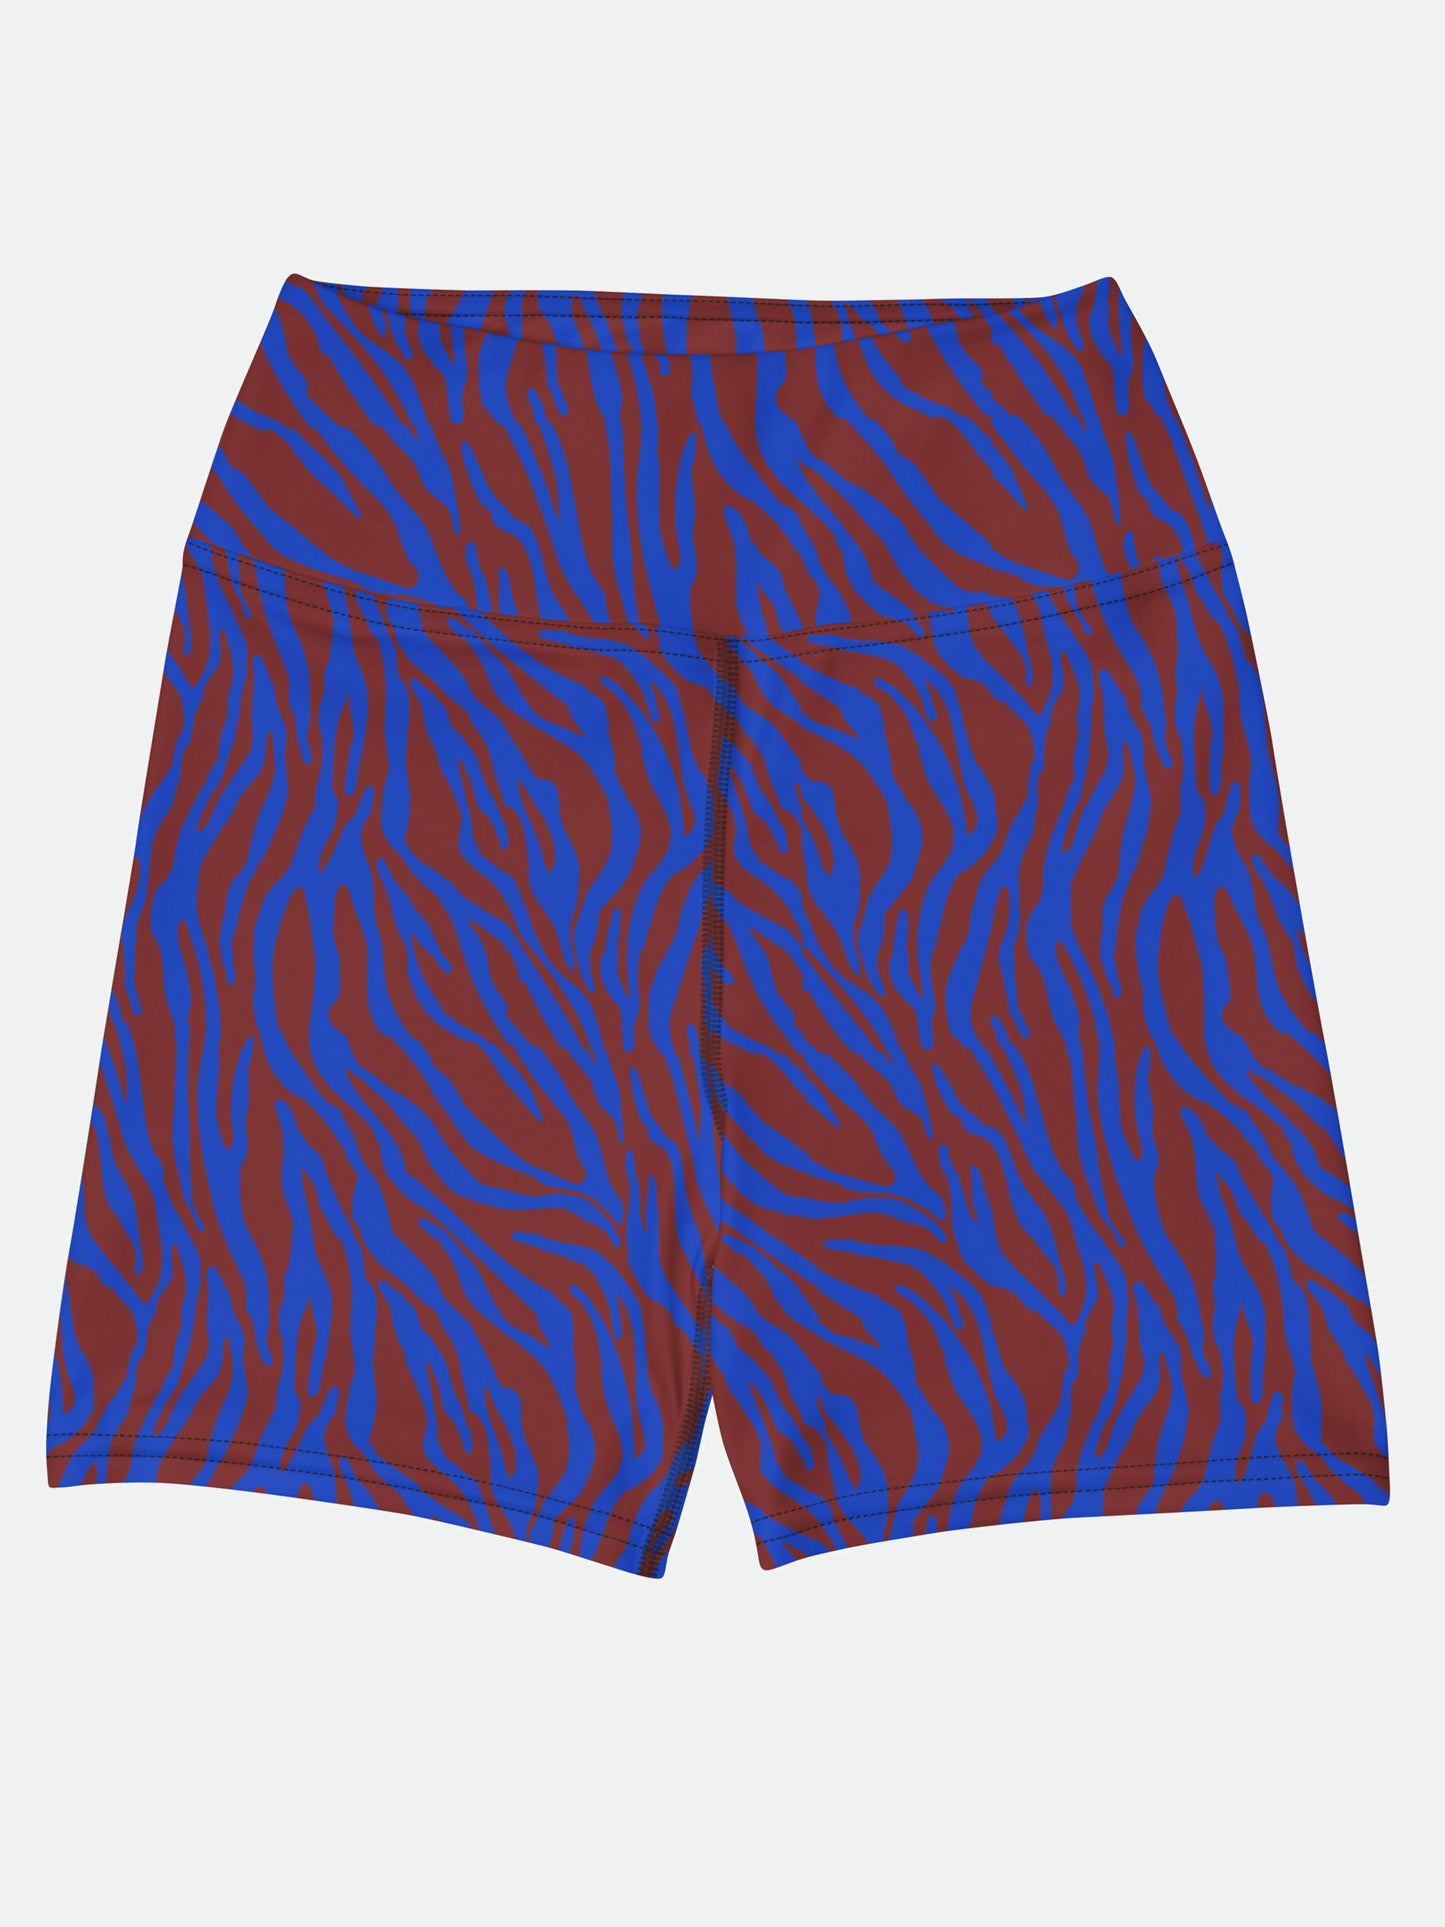 Printed Zebra Biker Shorts in Blue